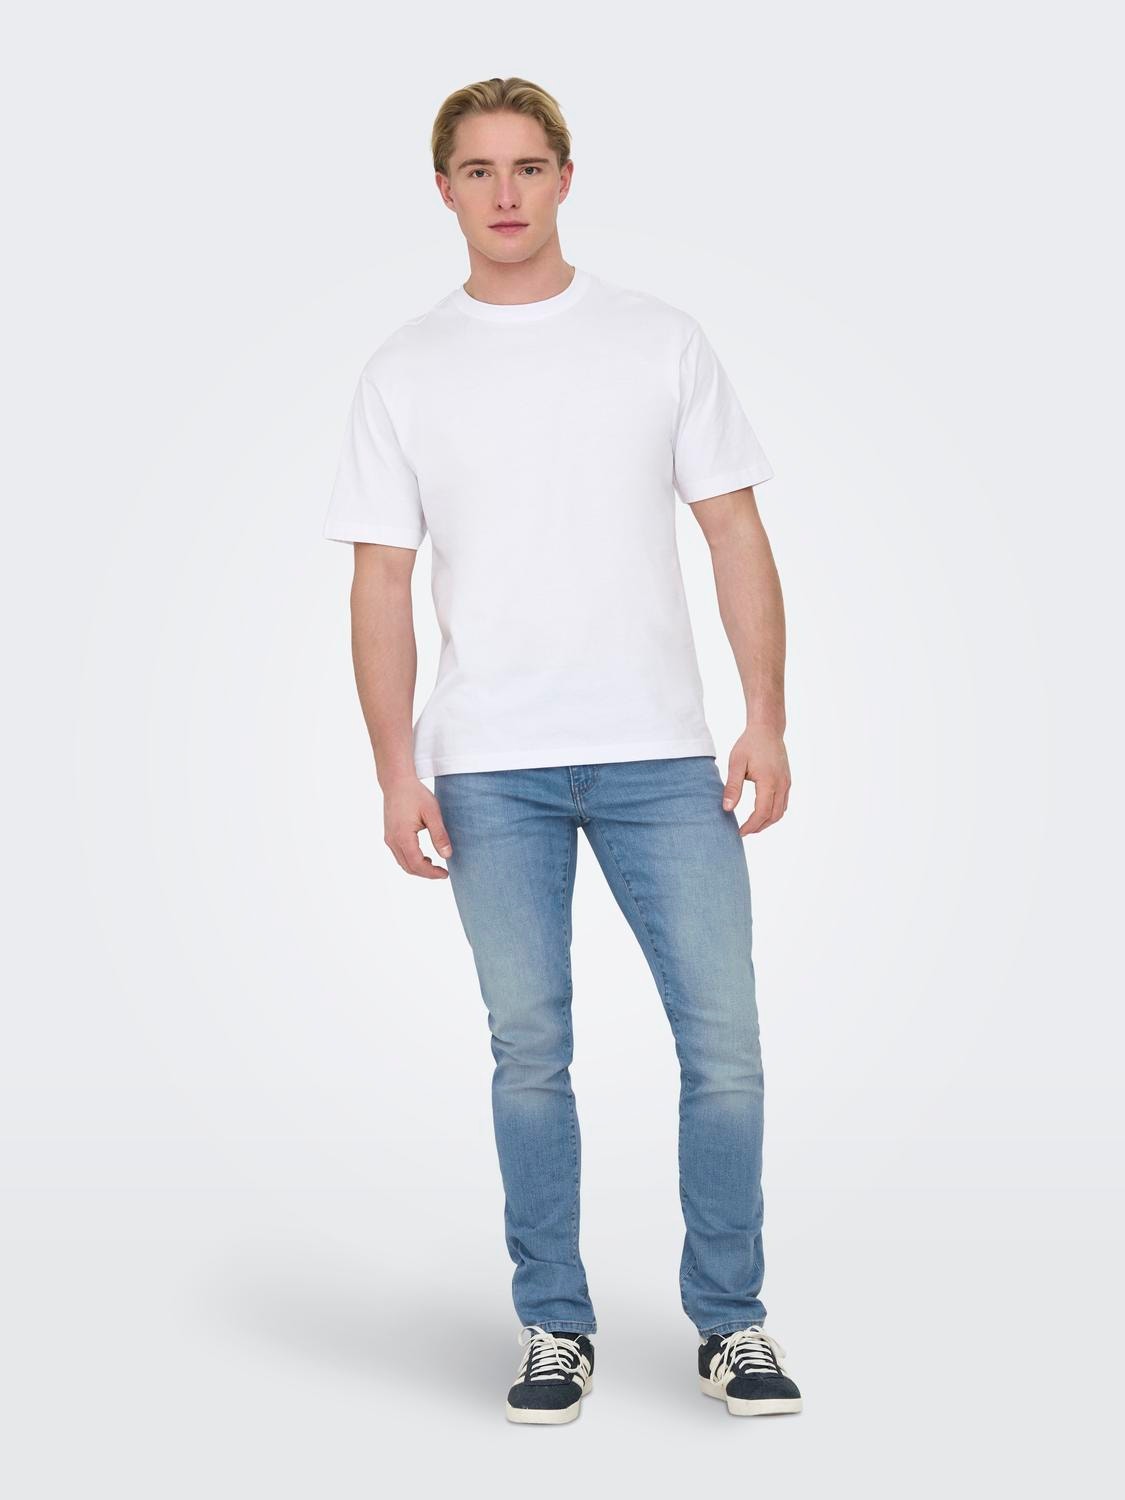 ONLY & SONS Jeans Slim Fit Taille basse -Light Blue Denim - 22028263